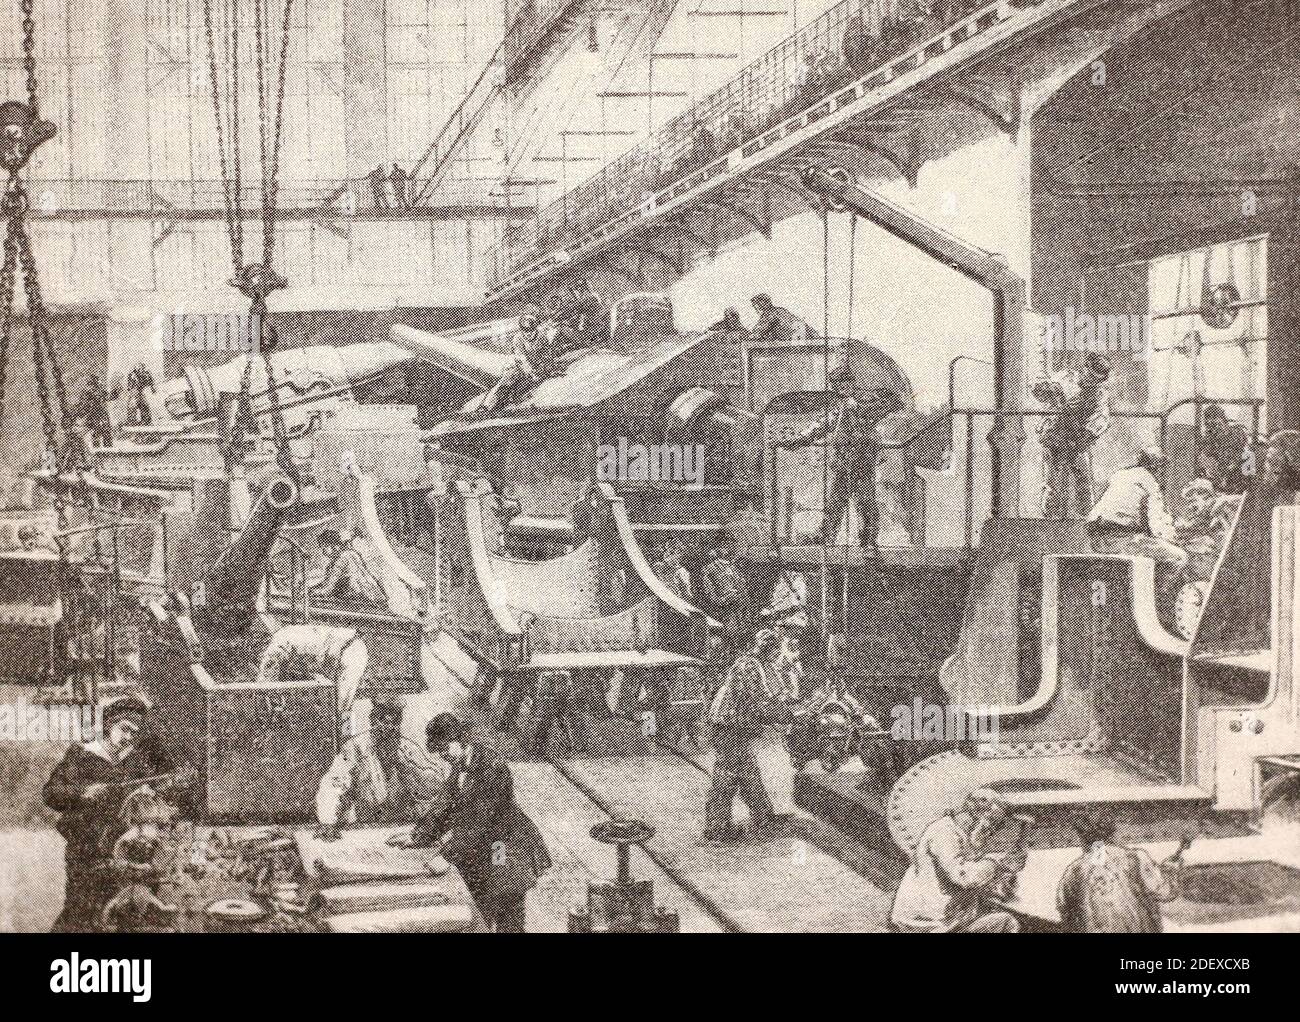 Assembling guns at the Krupp factory. Engraving of 1890. Stock Photo